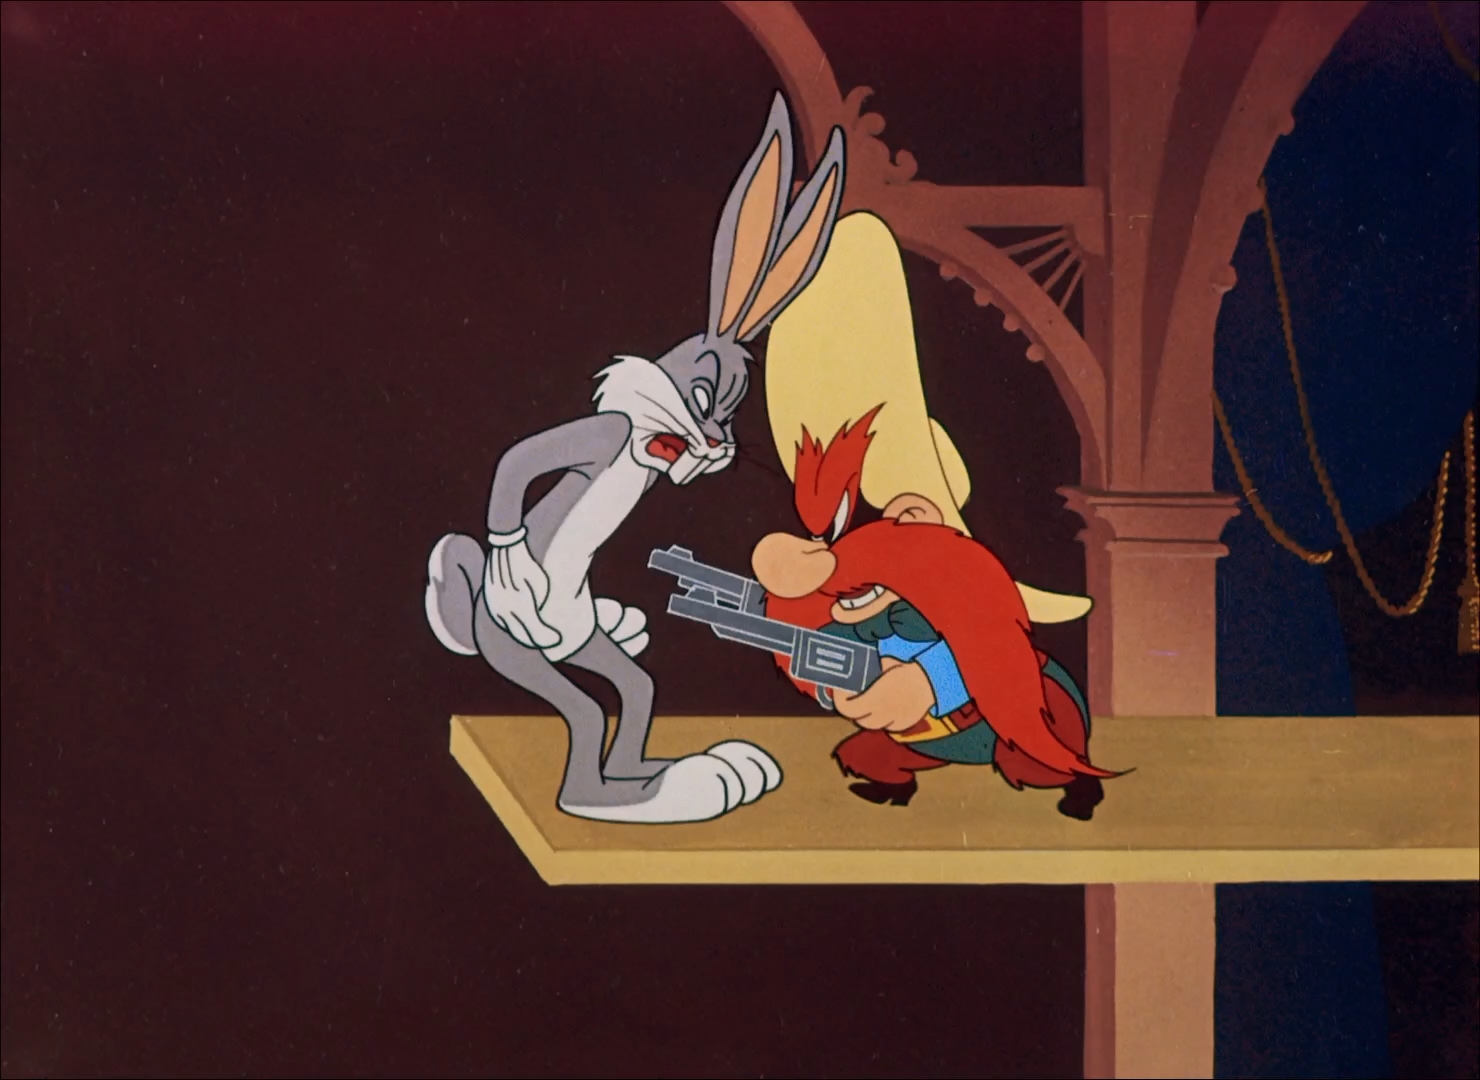 Looney Looney Looney Bugs Bunny la pelicula (1981)|1080p|Meg